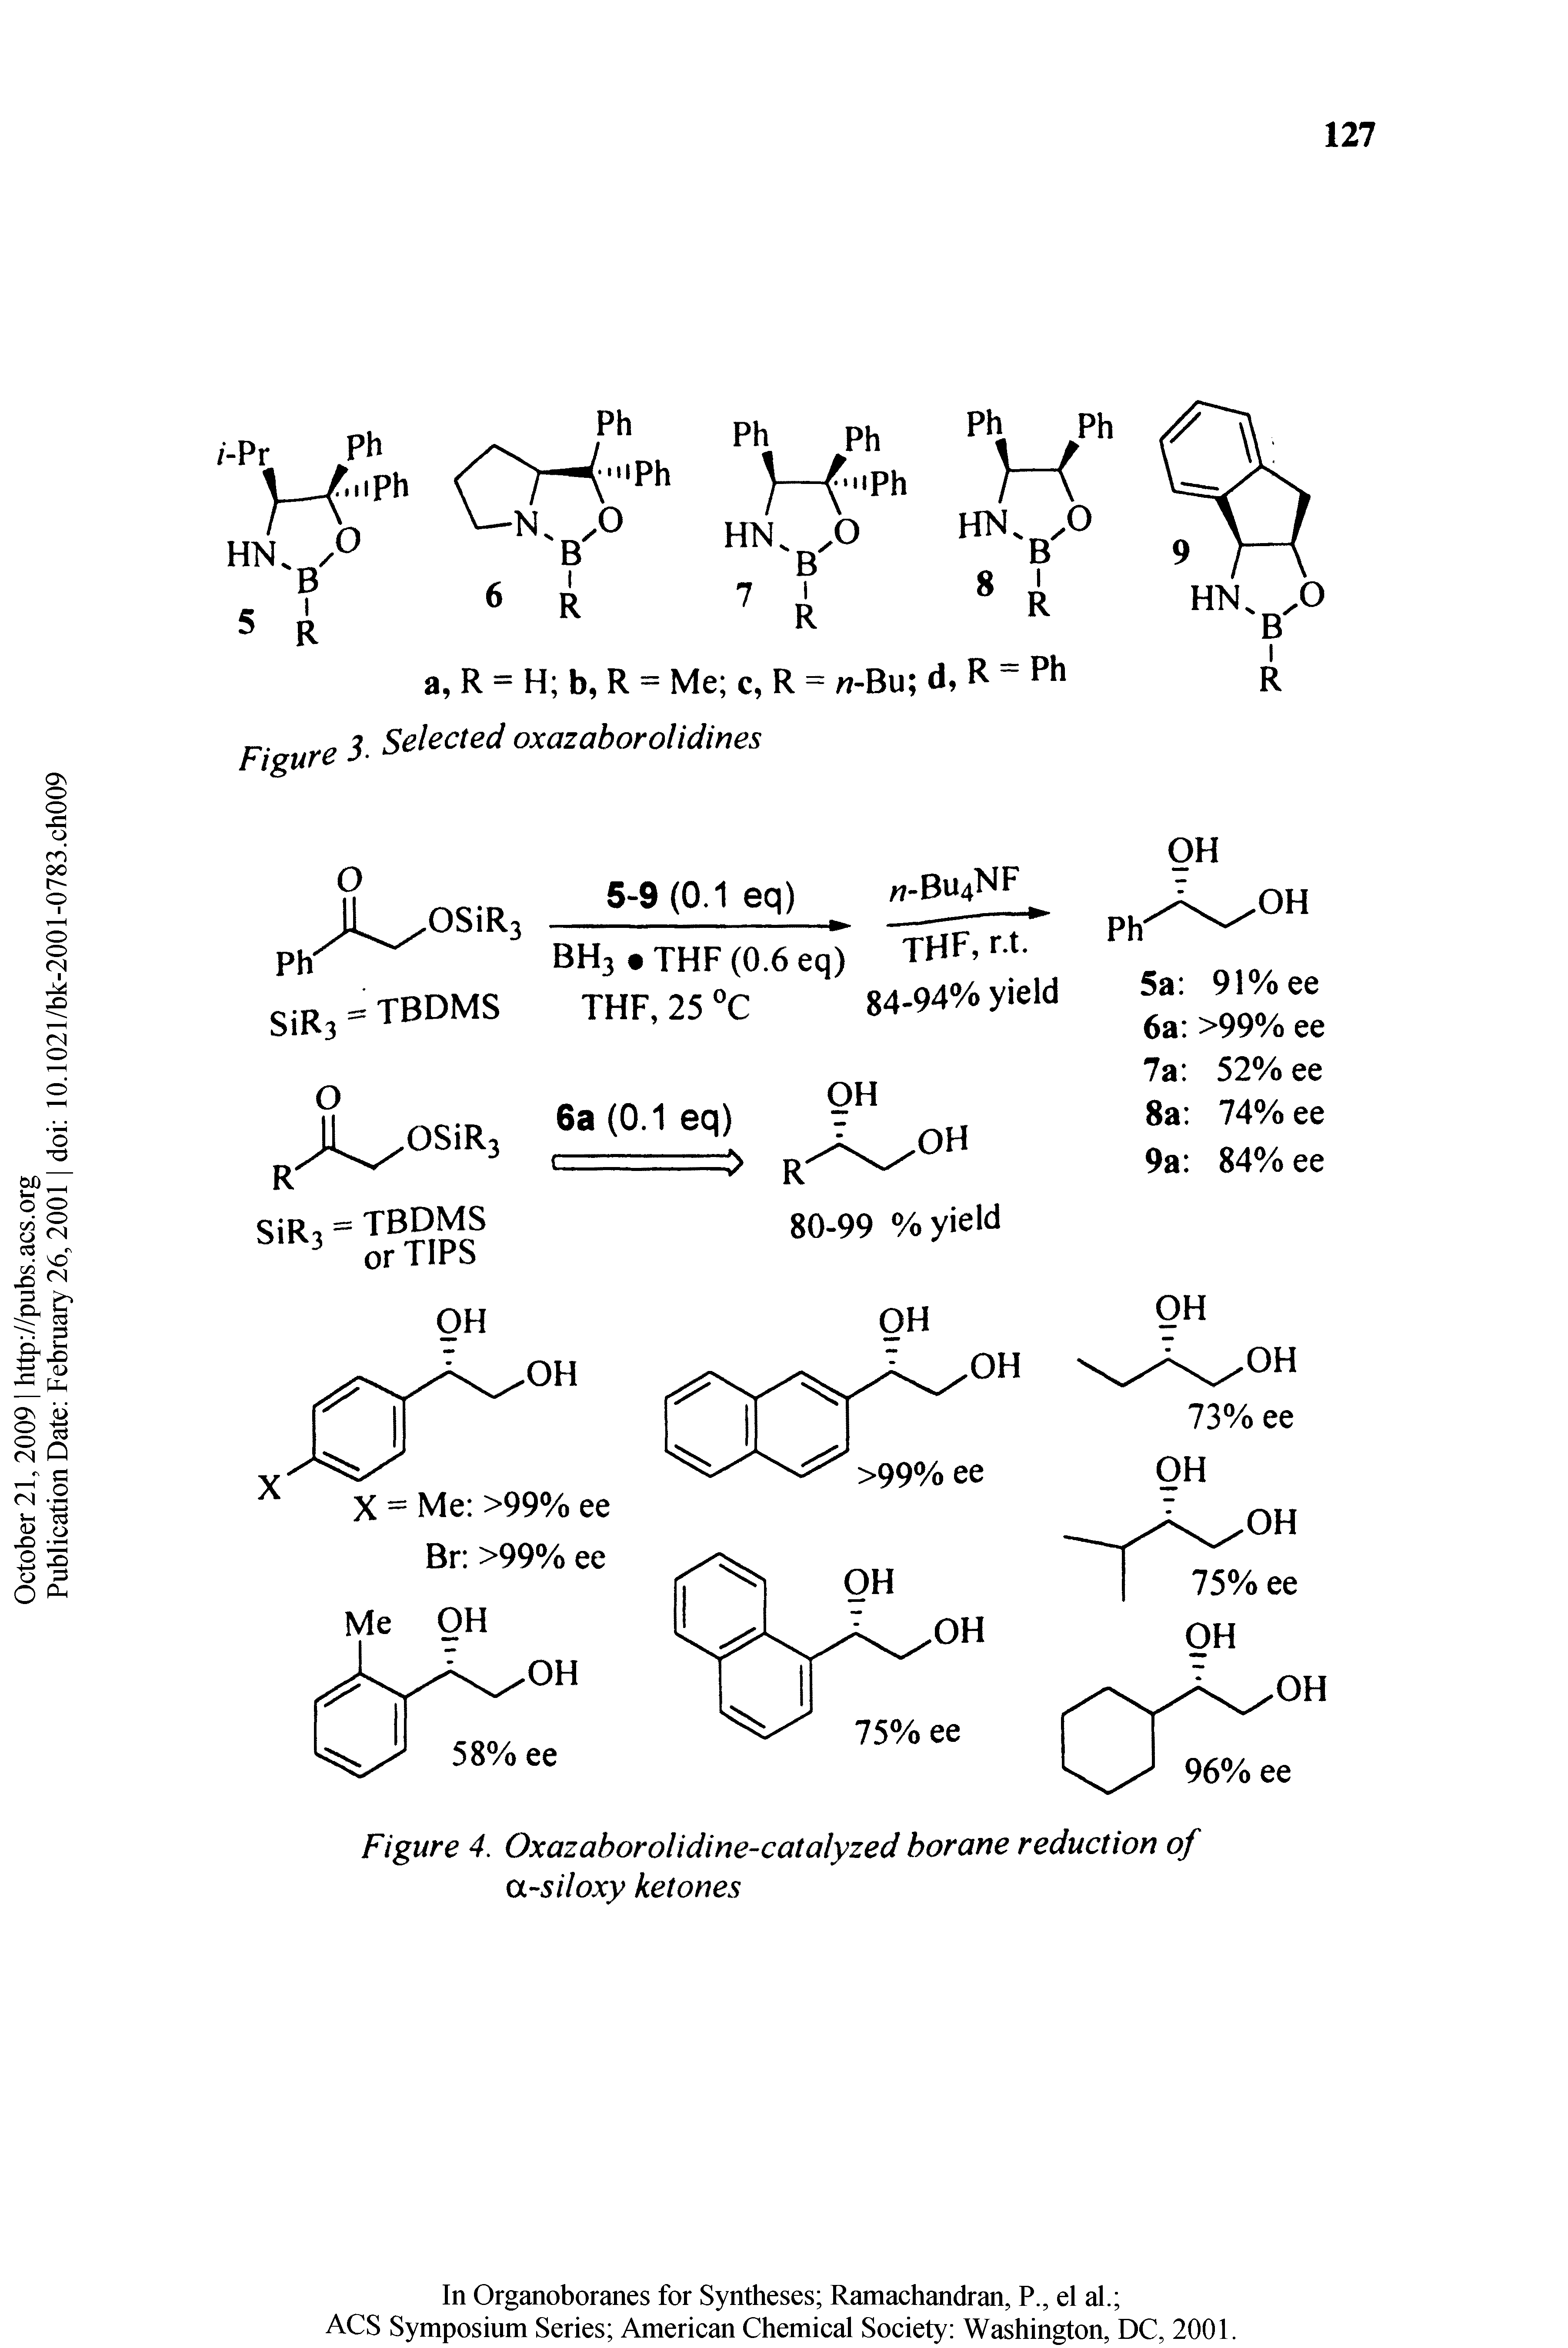 Figure 4. Oxazaborolidine-catalyzed horane reduction of a-siloxy ketones...